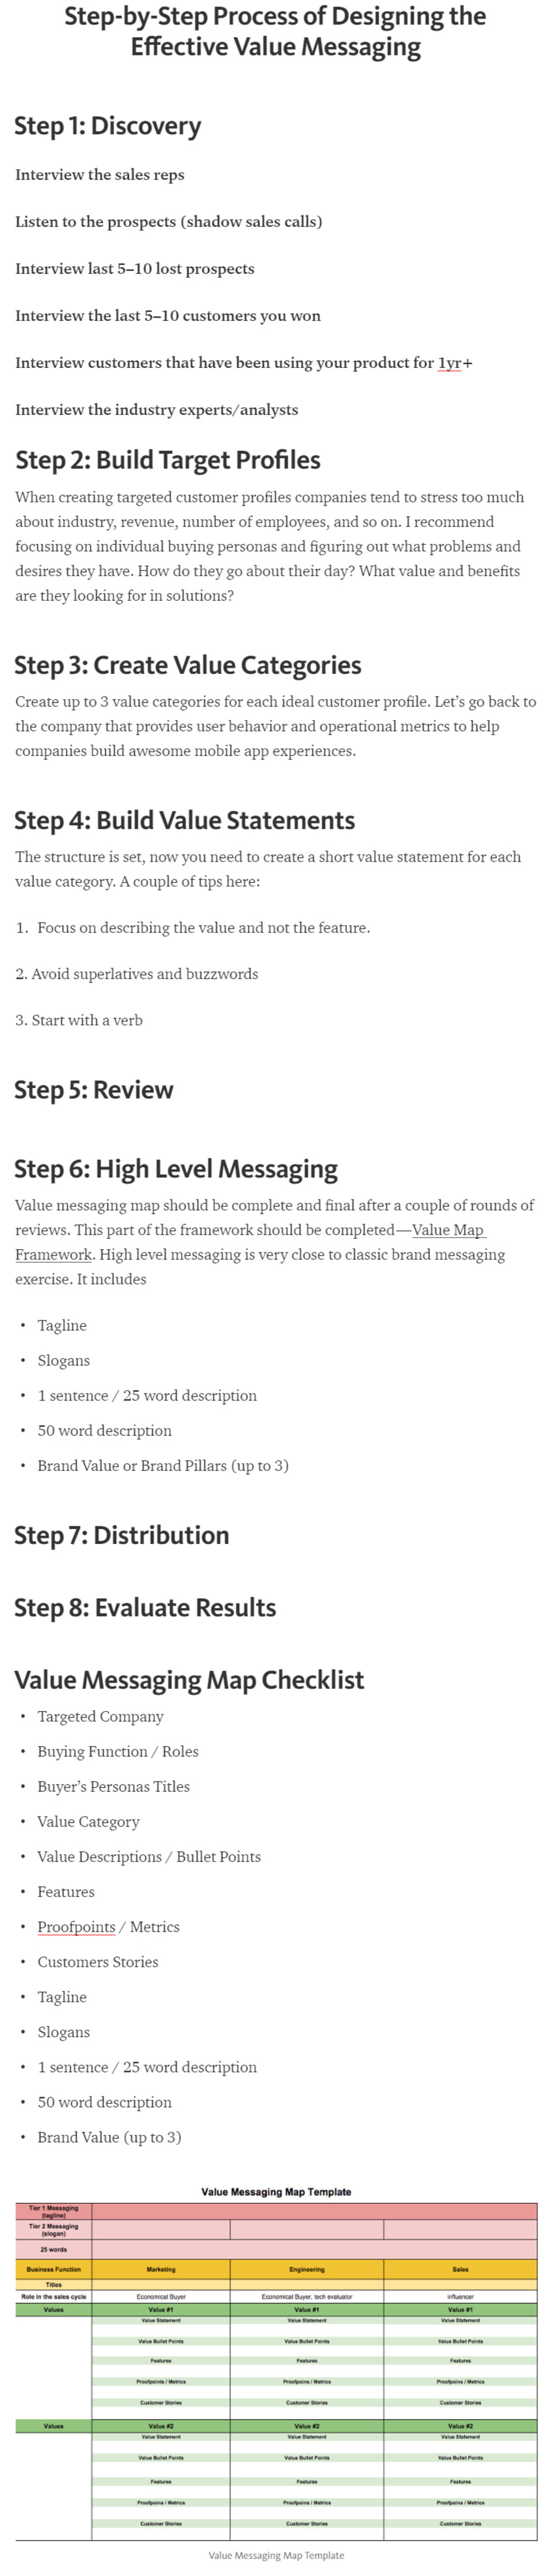 Effective Value Messaging: The Definitive Guide — myxyx via Medium | The MarTech Digest | Scoop.it